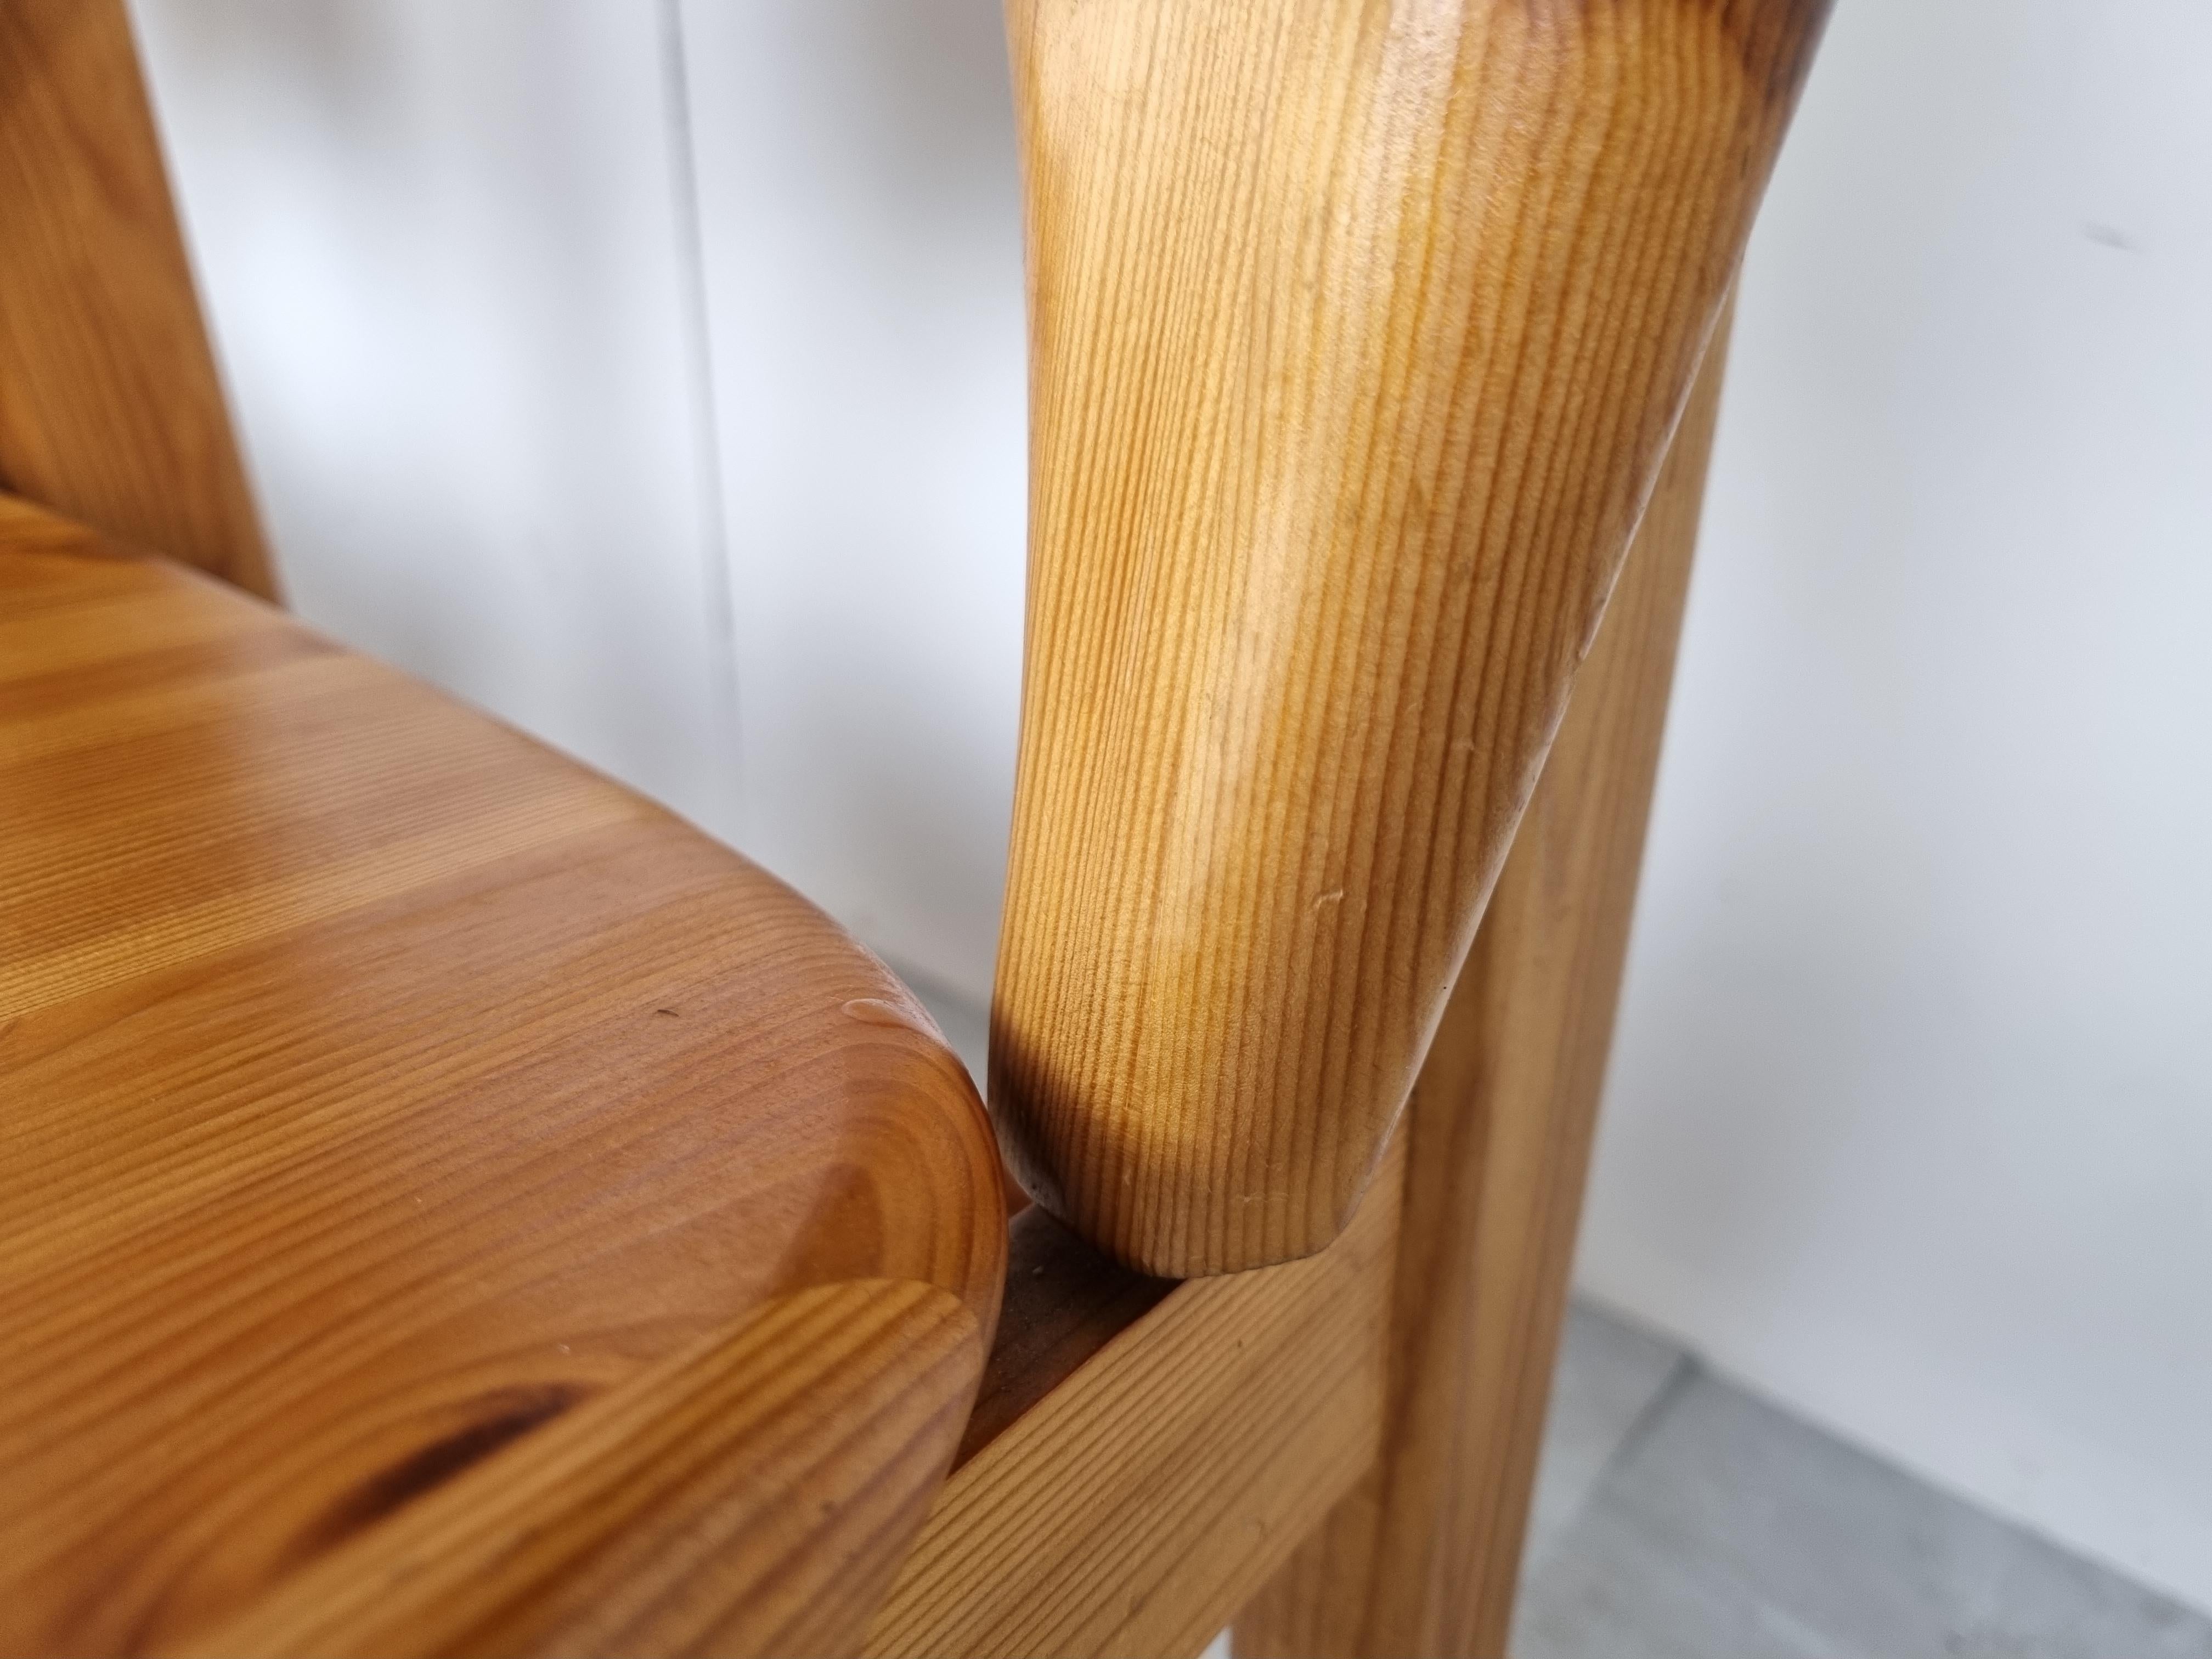 Late 20th Century Rainer Daumiller Pine Wood Dining Chairs for Hirtshals Savvaerk - Set of 4 - 198